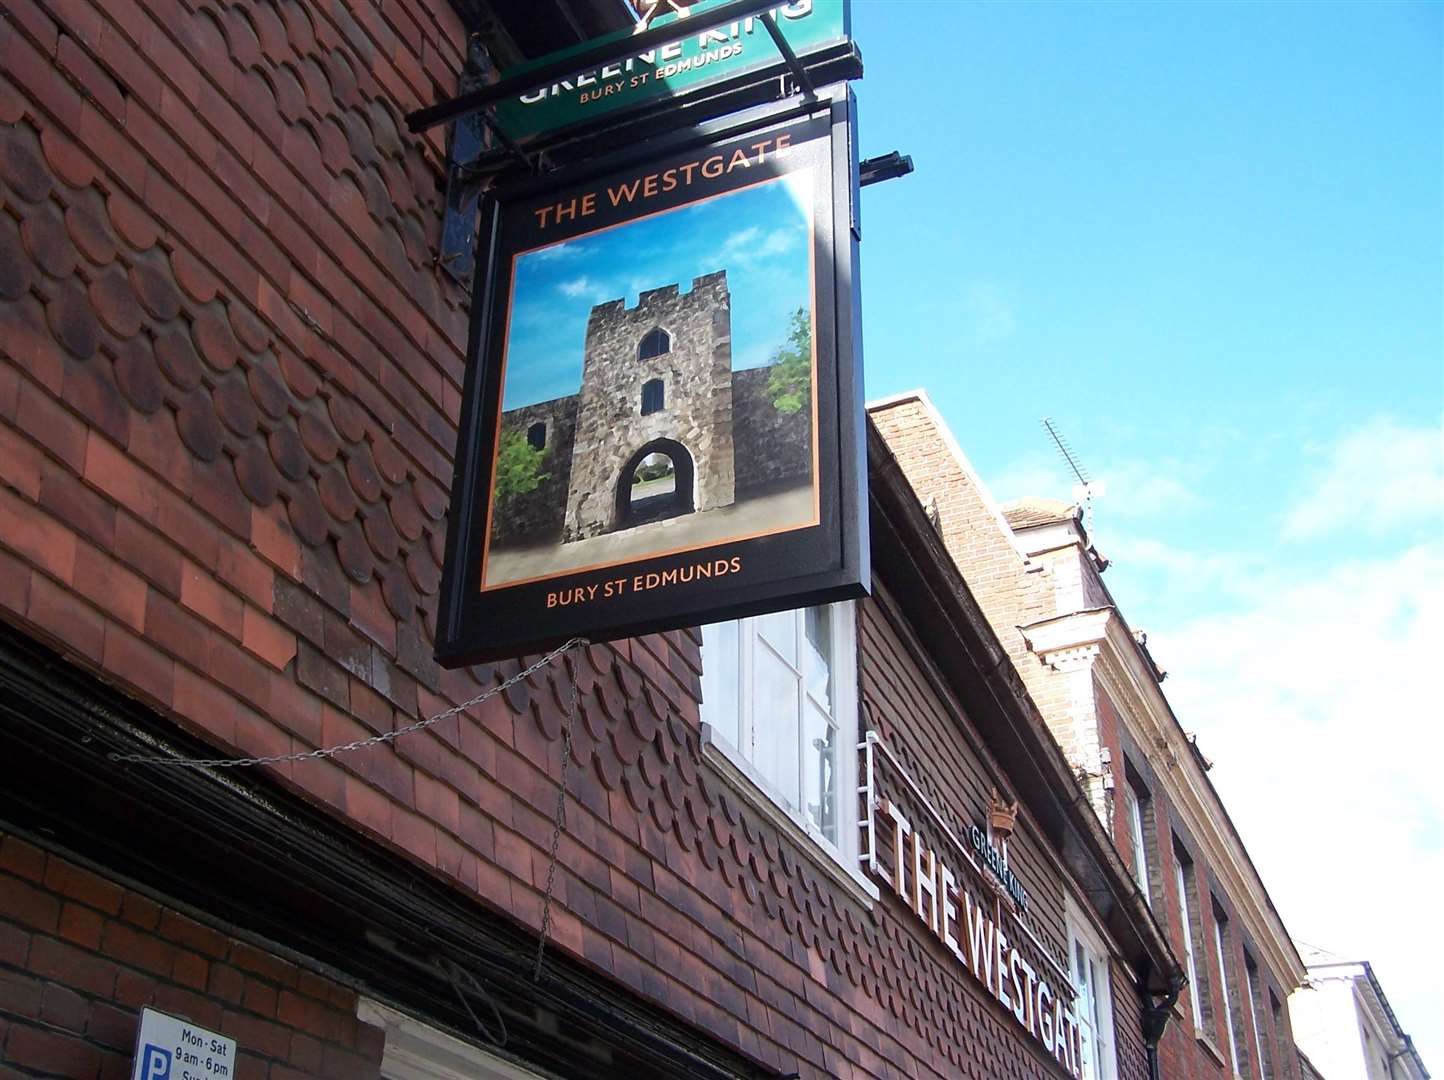 The Westgate pub, formerly The Black Boy